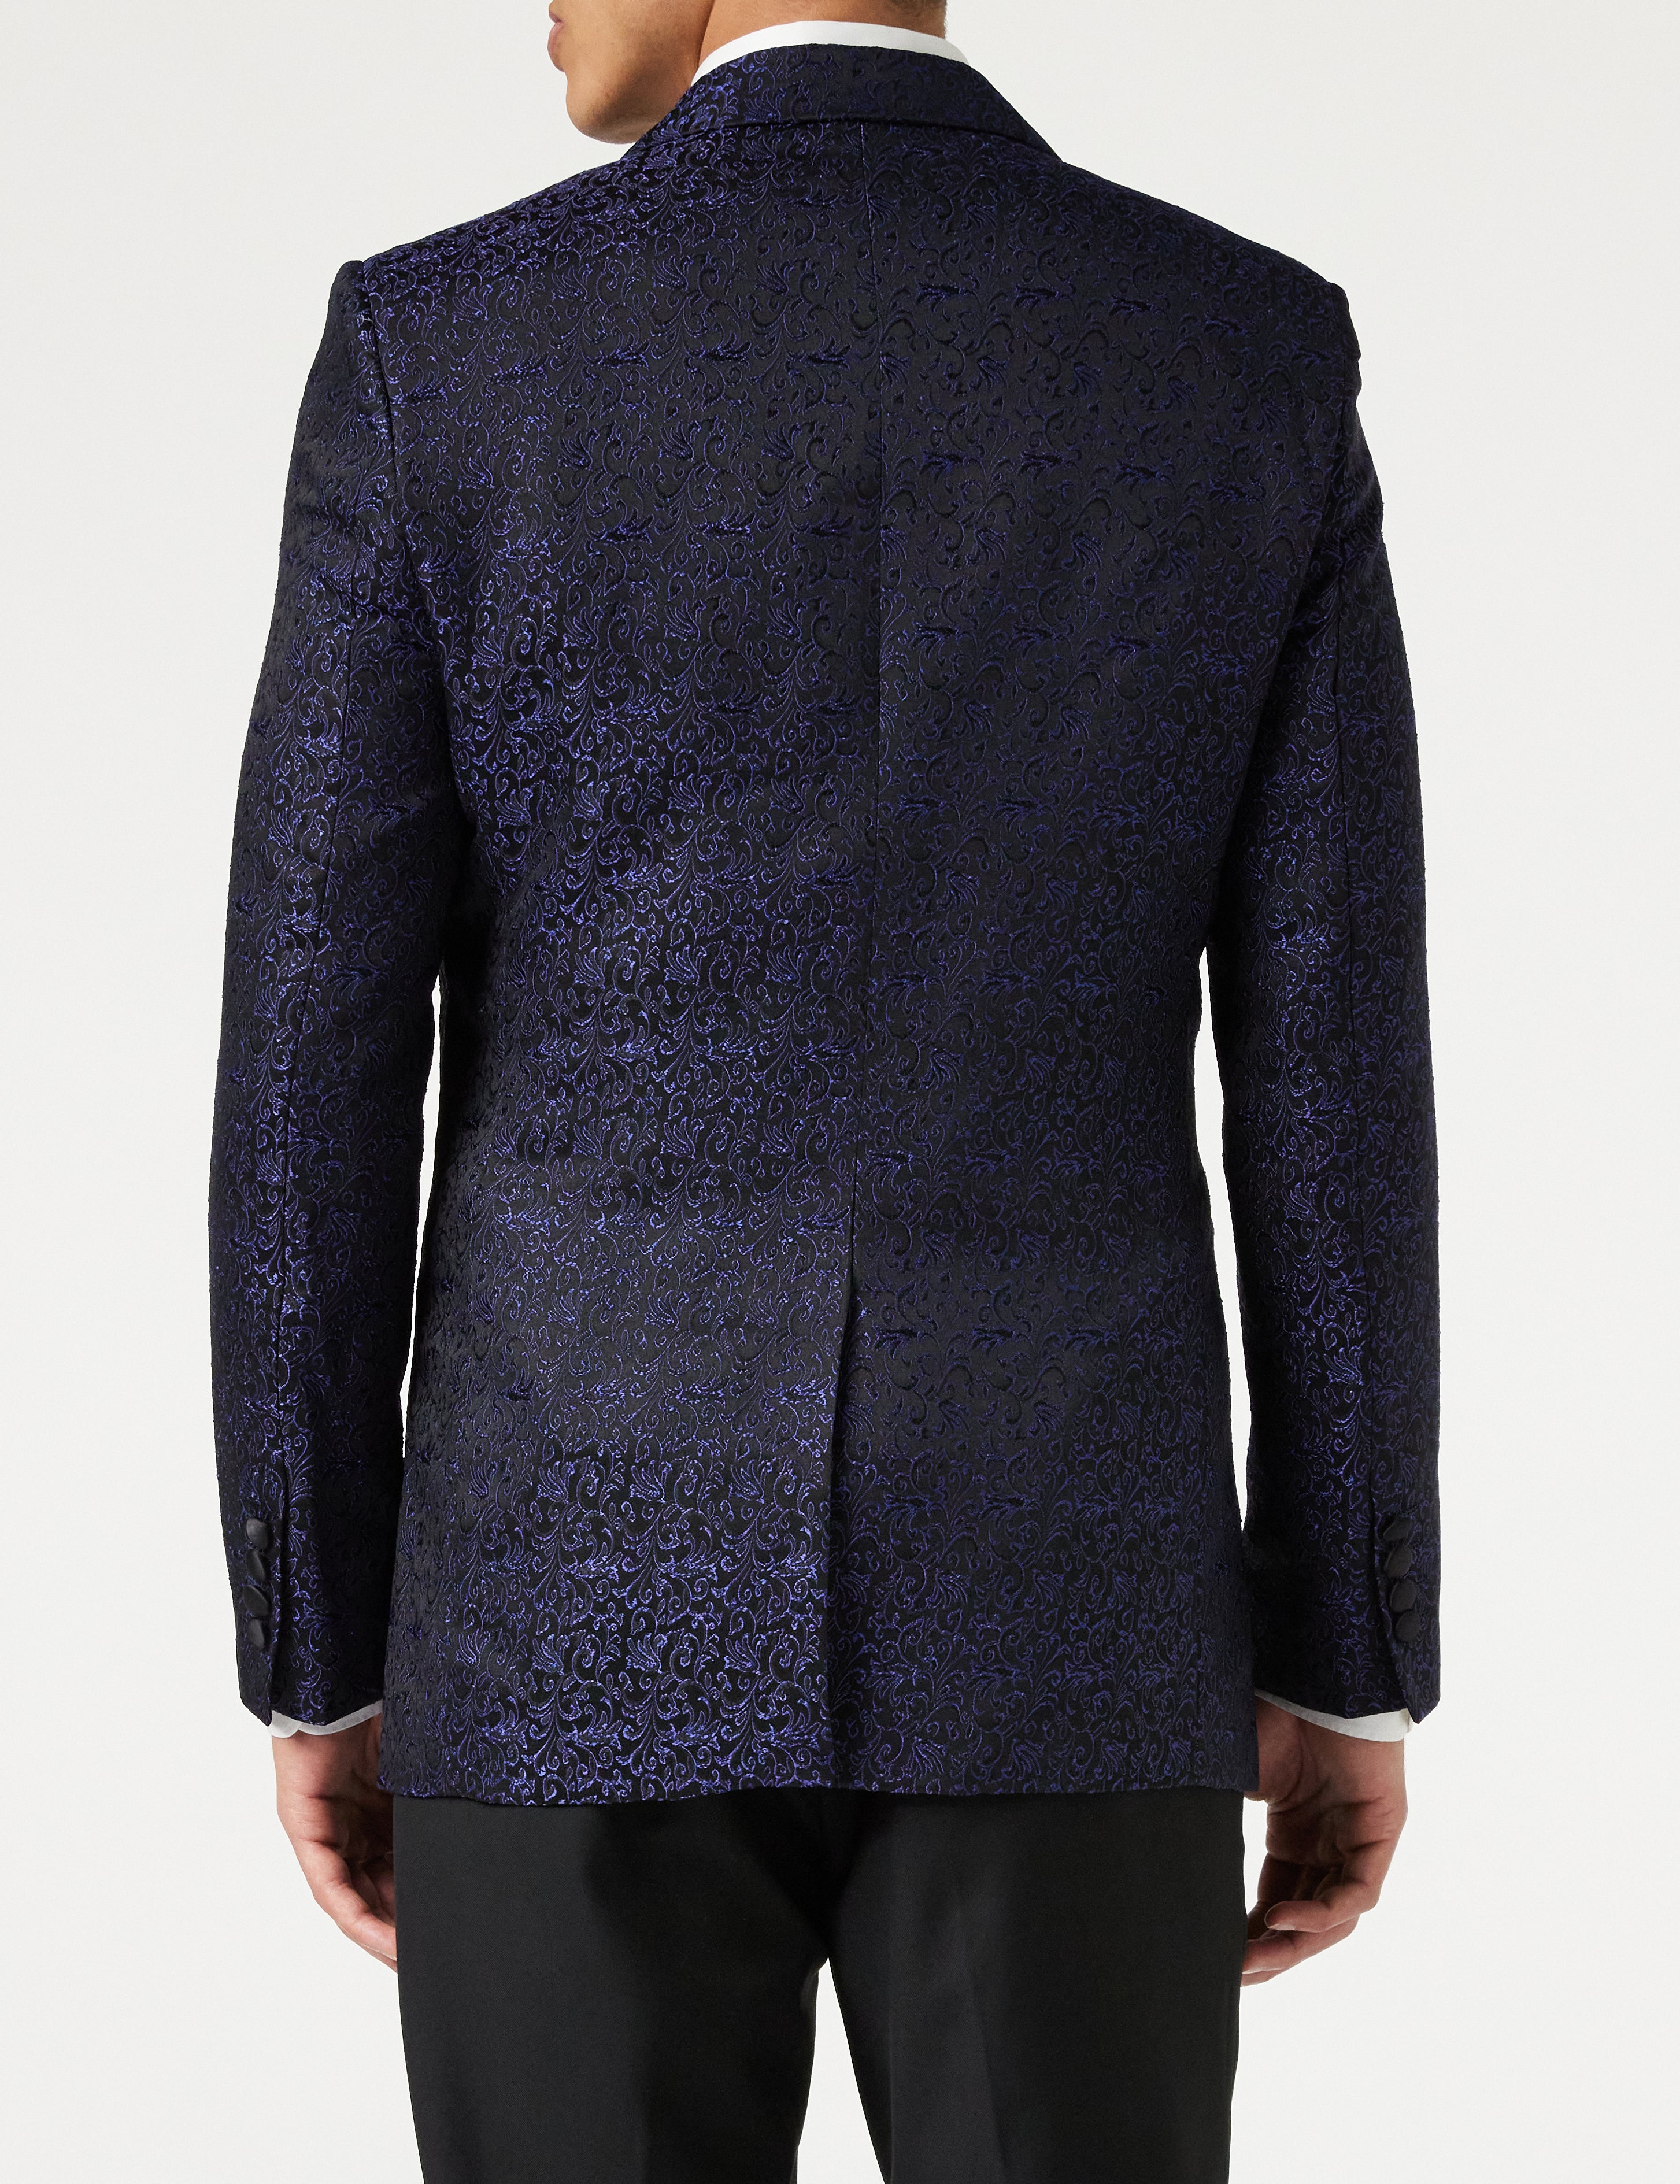 BRIAN - Floral Jacquard Print Blue Tuxedo Jacket With Waistcoat